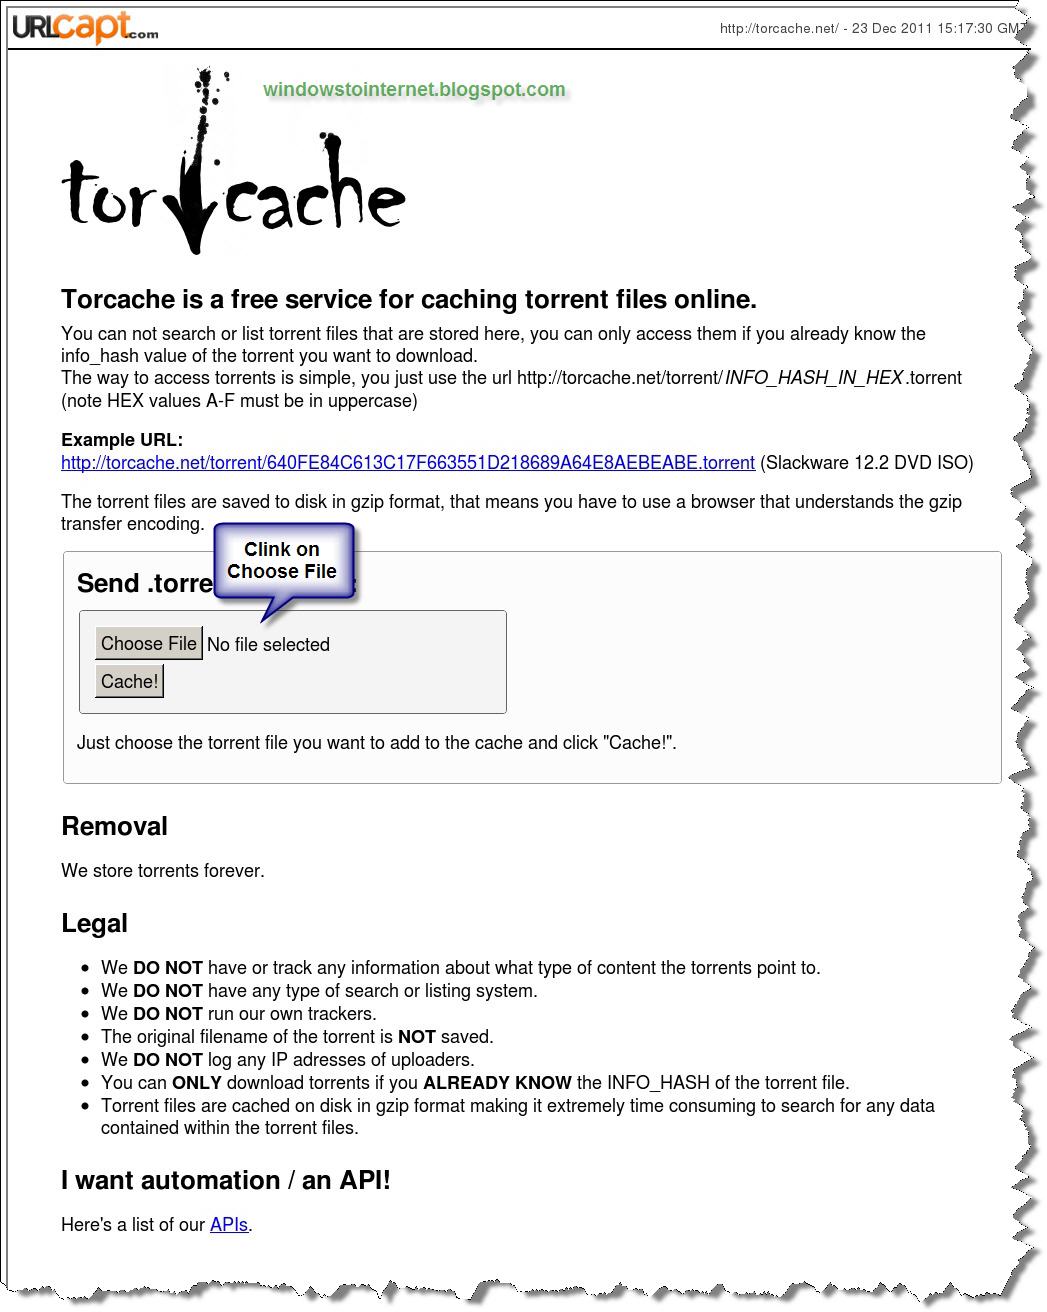 download torrent through internet download manager